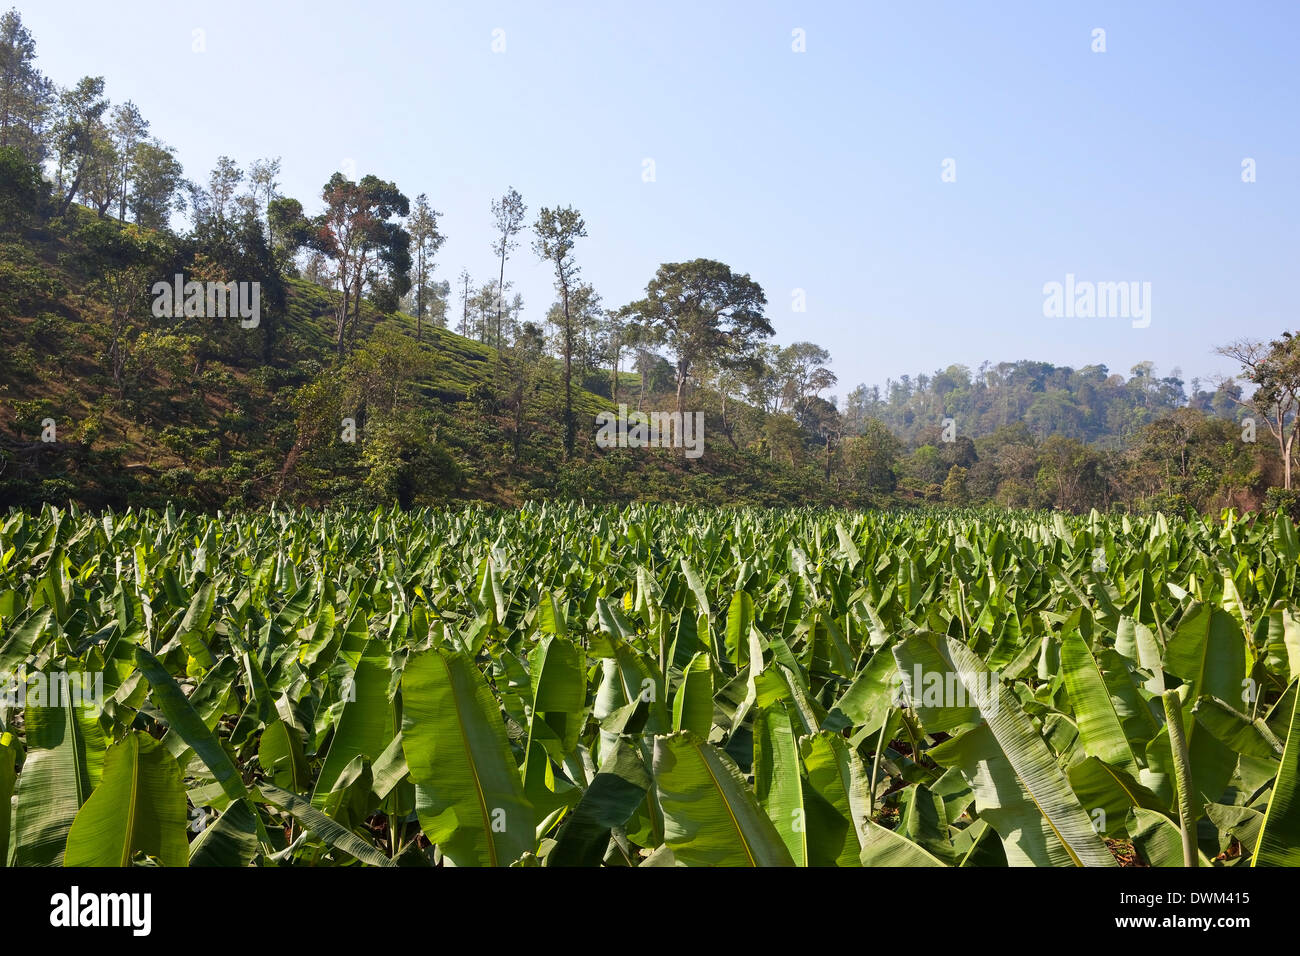 Agrarlandschaft mit Banane ernten und Baum bedeckt Hügel in Kerala, Südindien. Stockfoto